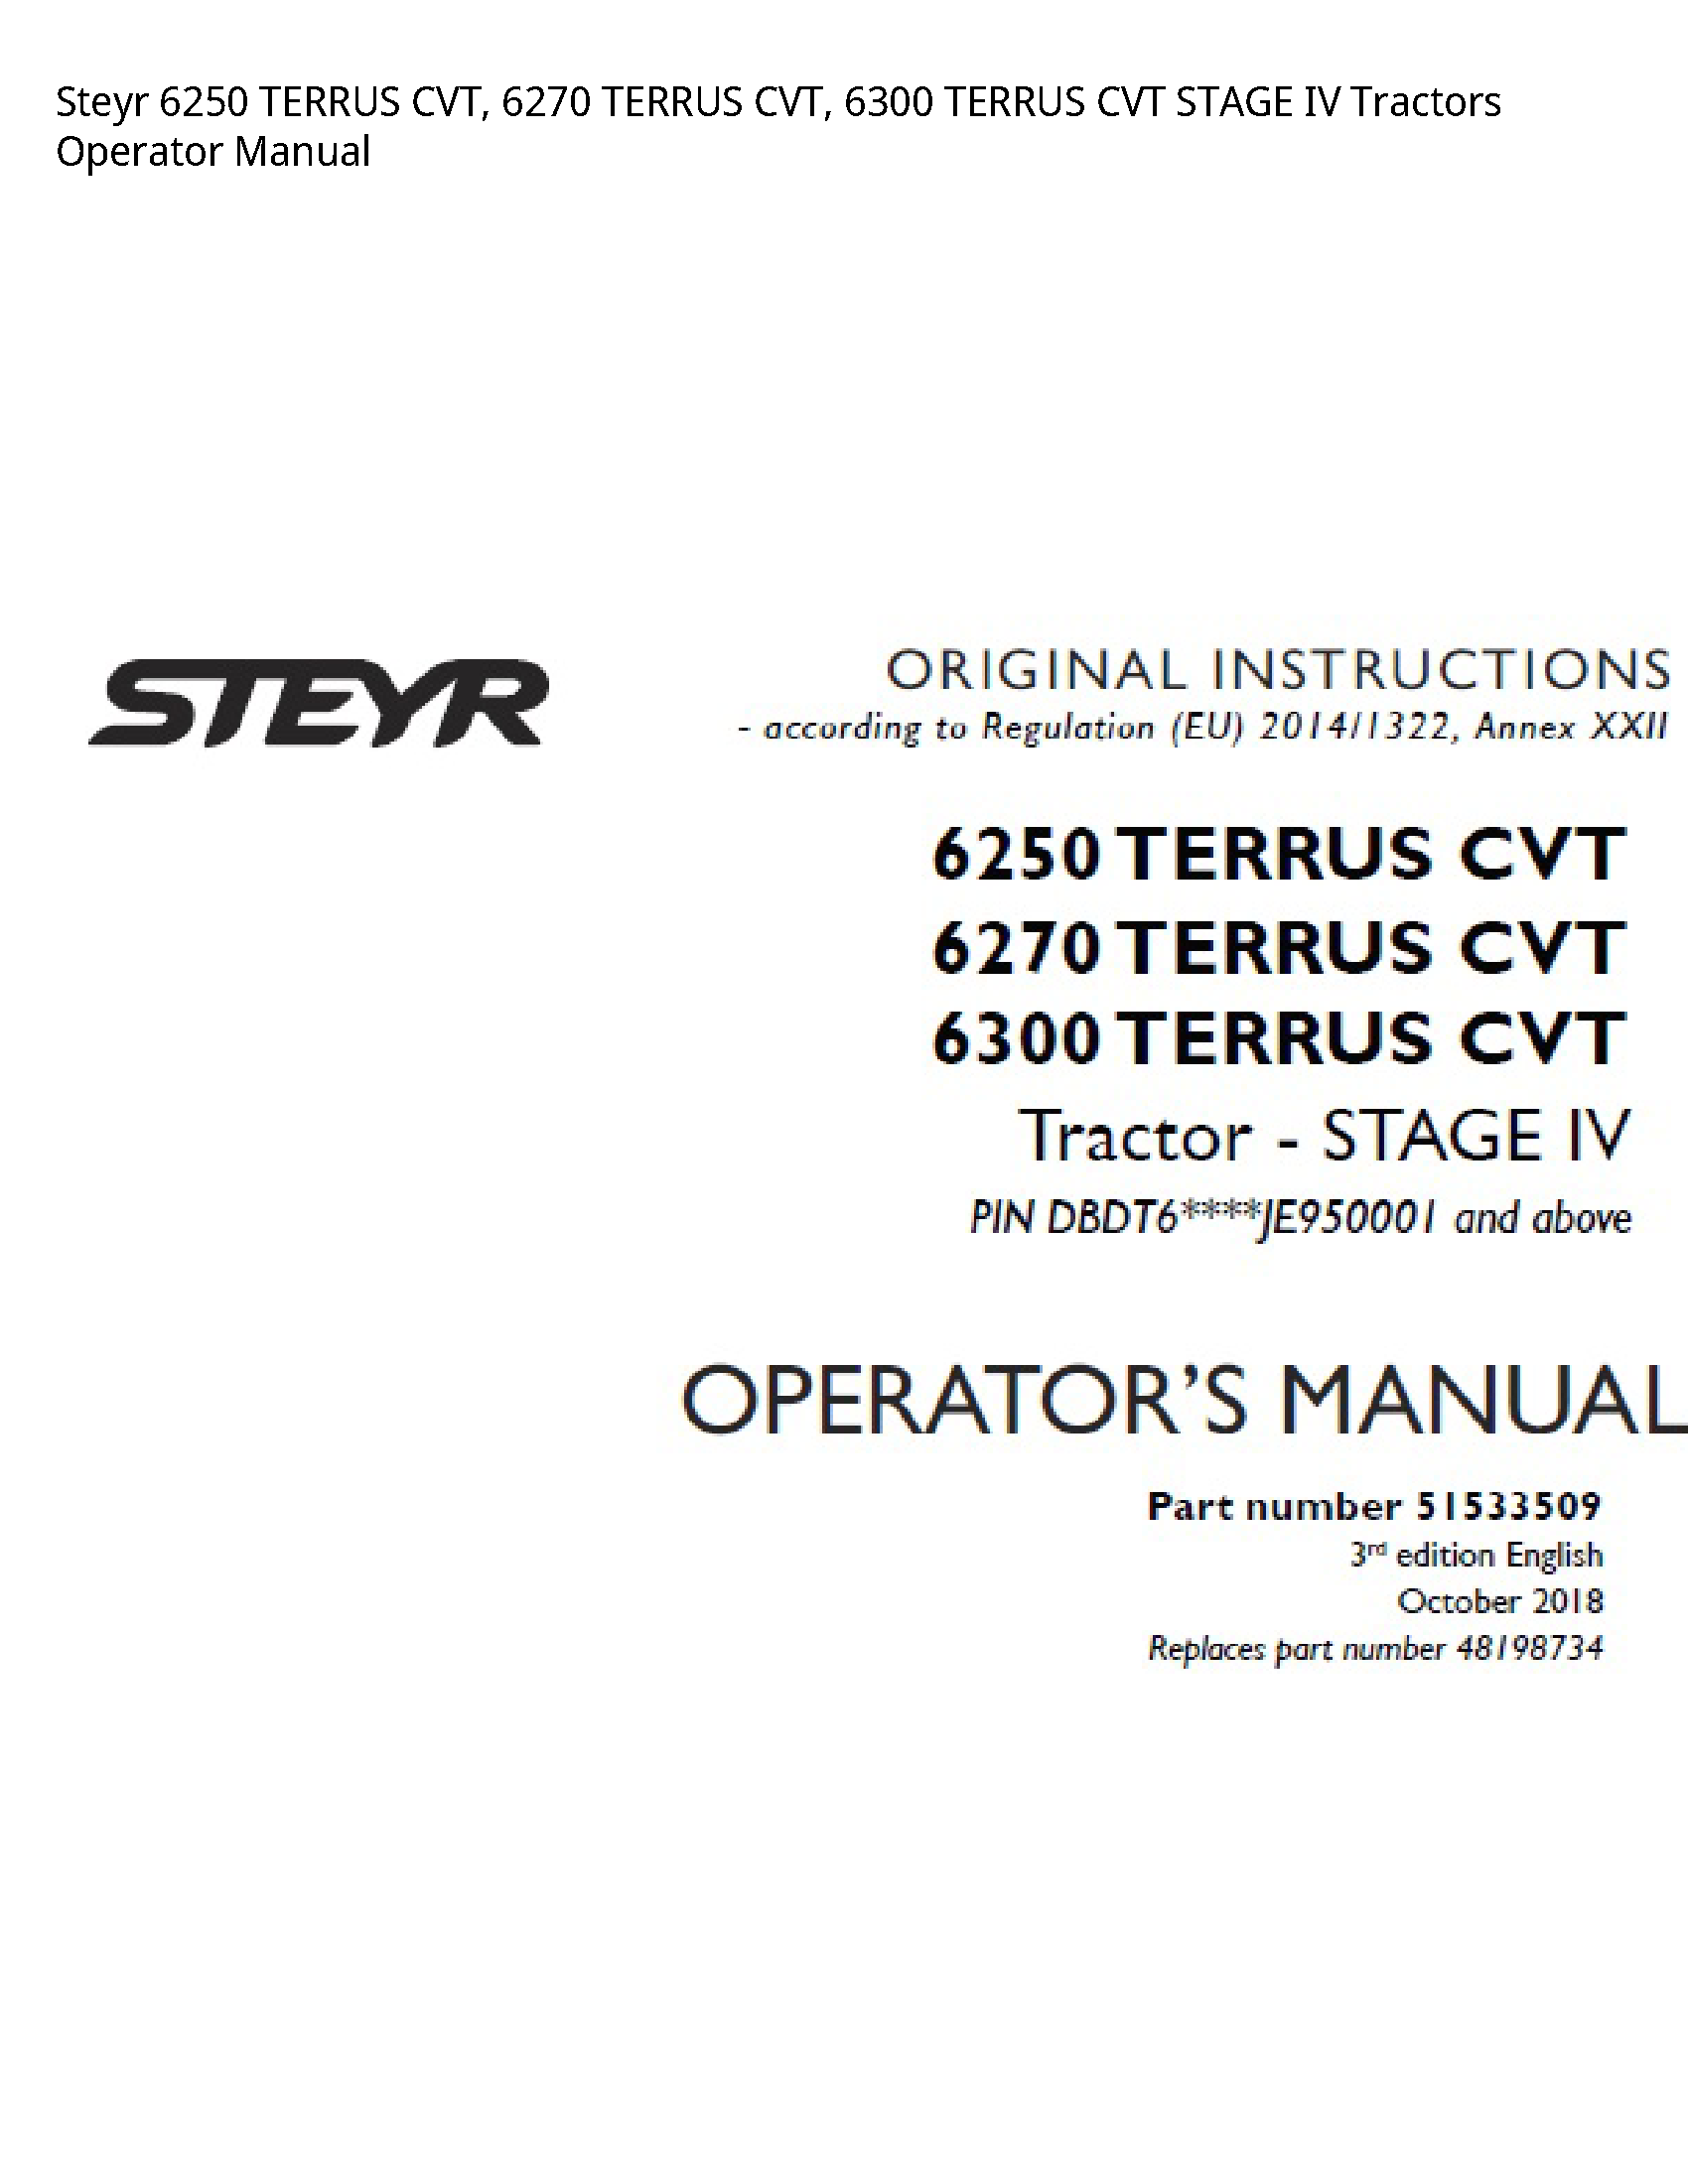 Steyr 6250 TERRUS CVT manual